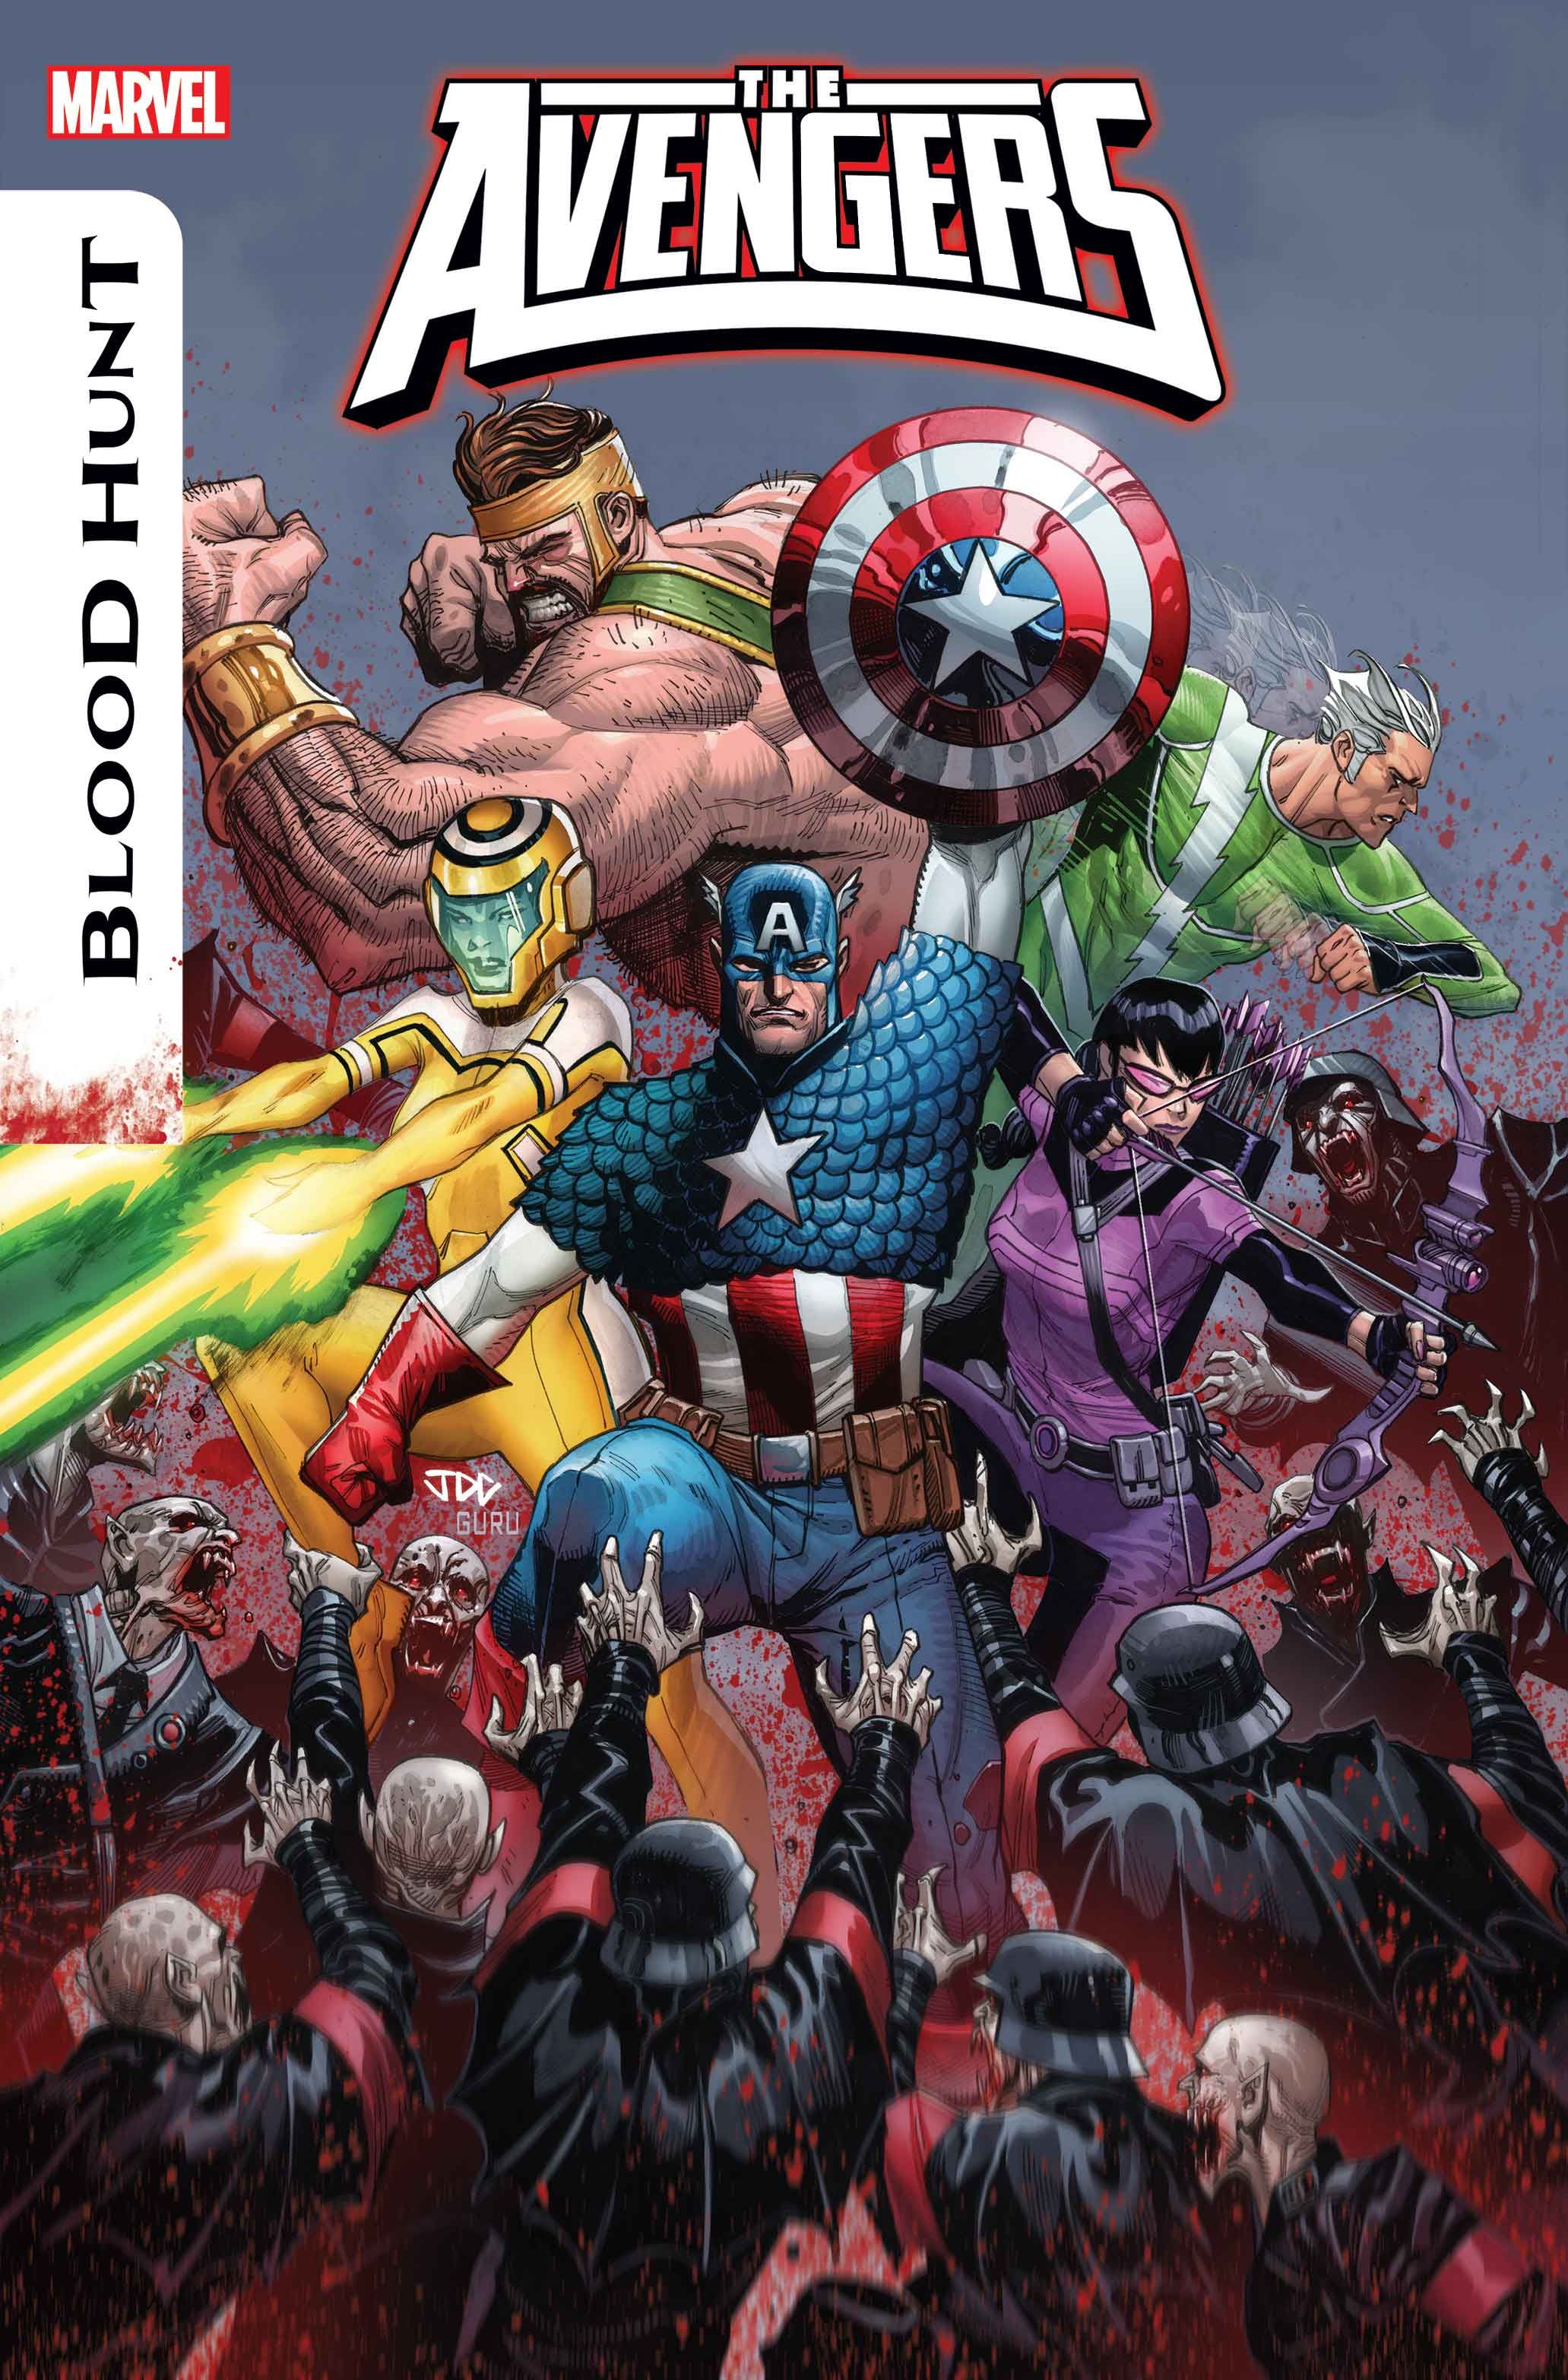 Avengers #14 cover, Captain America, Hawkeye, Quicksilver, Hercules, and Hazmat fight vampires during BLOOD HUNT